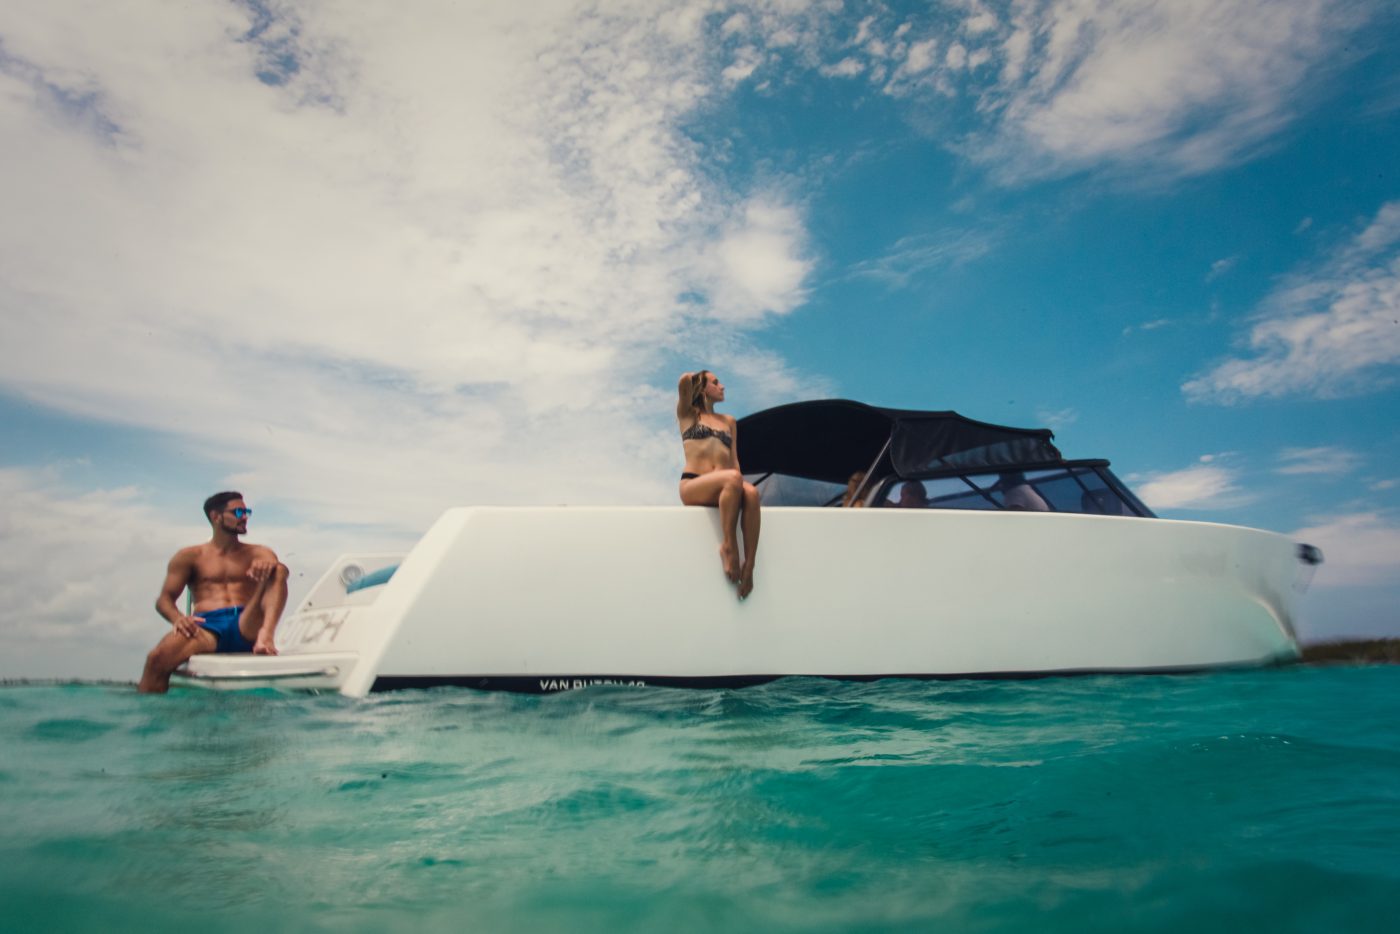 VanDucht Private yacht rental in Puerto Aventuras Riviera Maya and Cozumel boat rentals